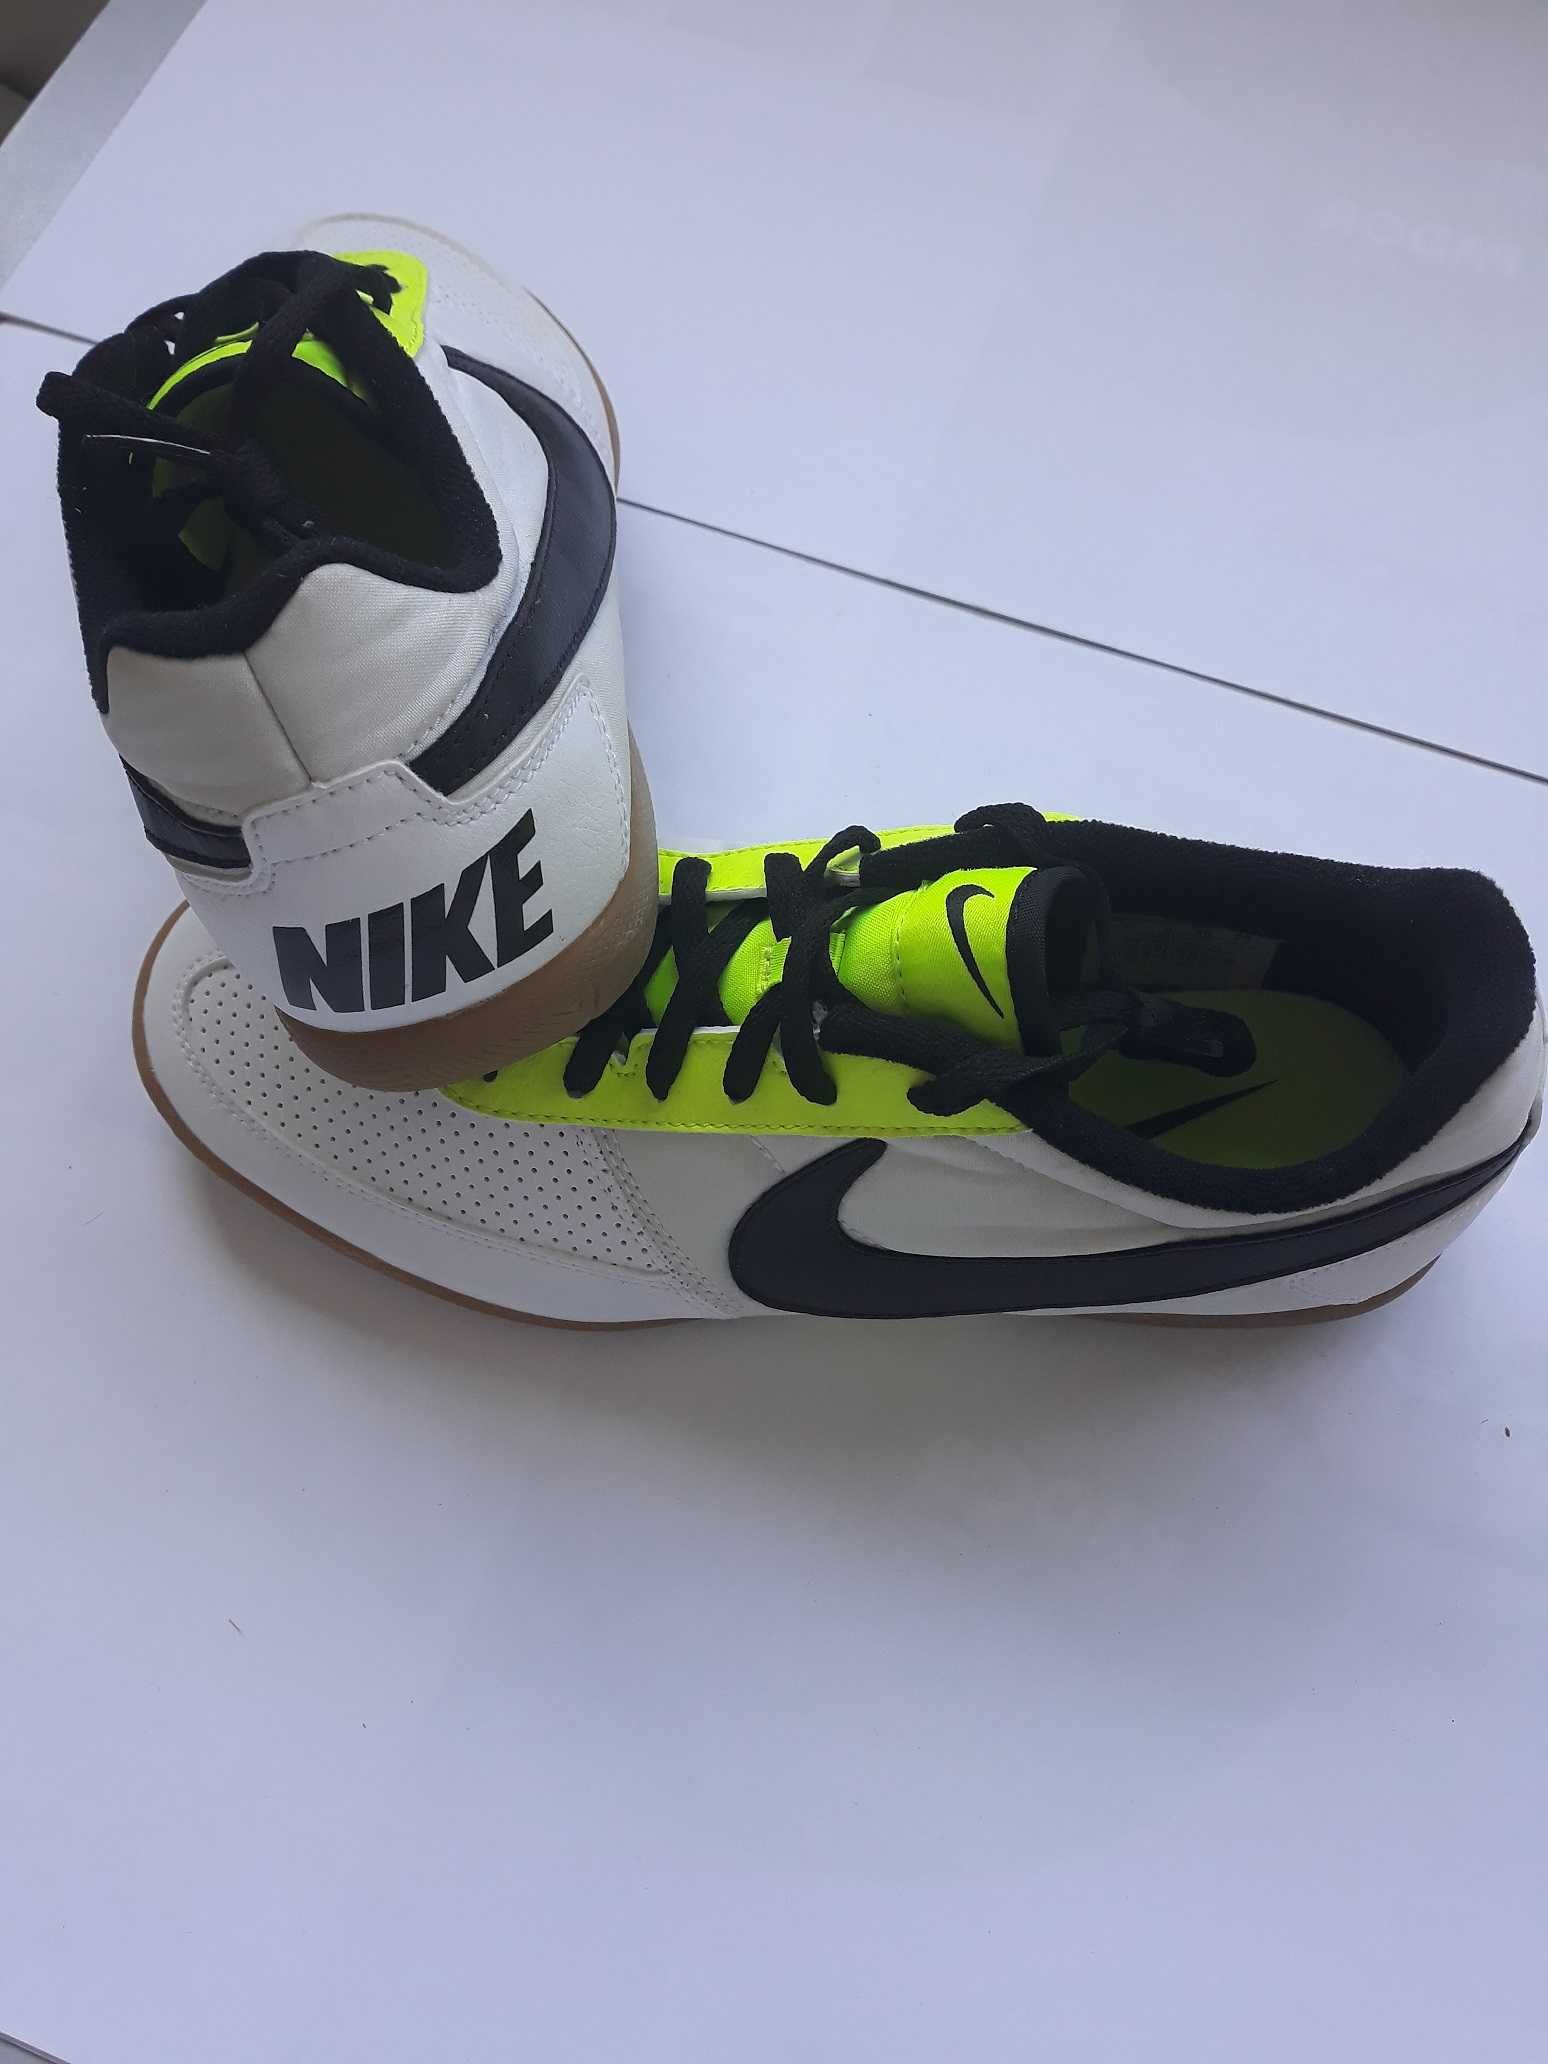 Sapatilhas de Futsal Nike Davinho n.º 40